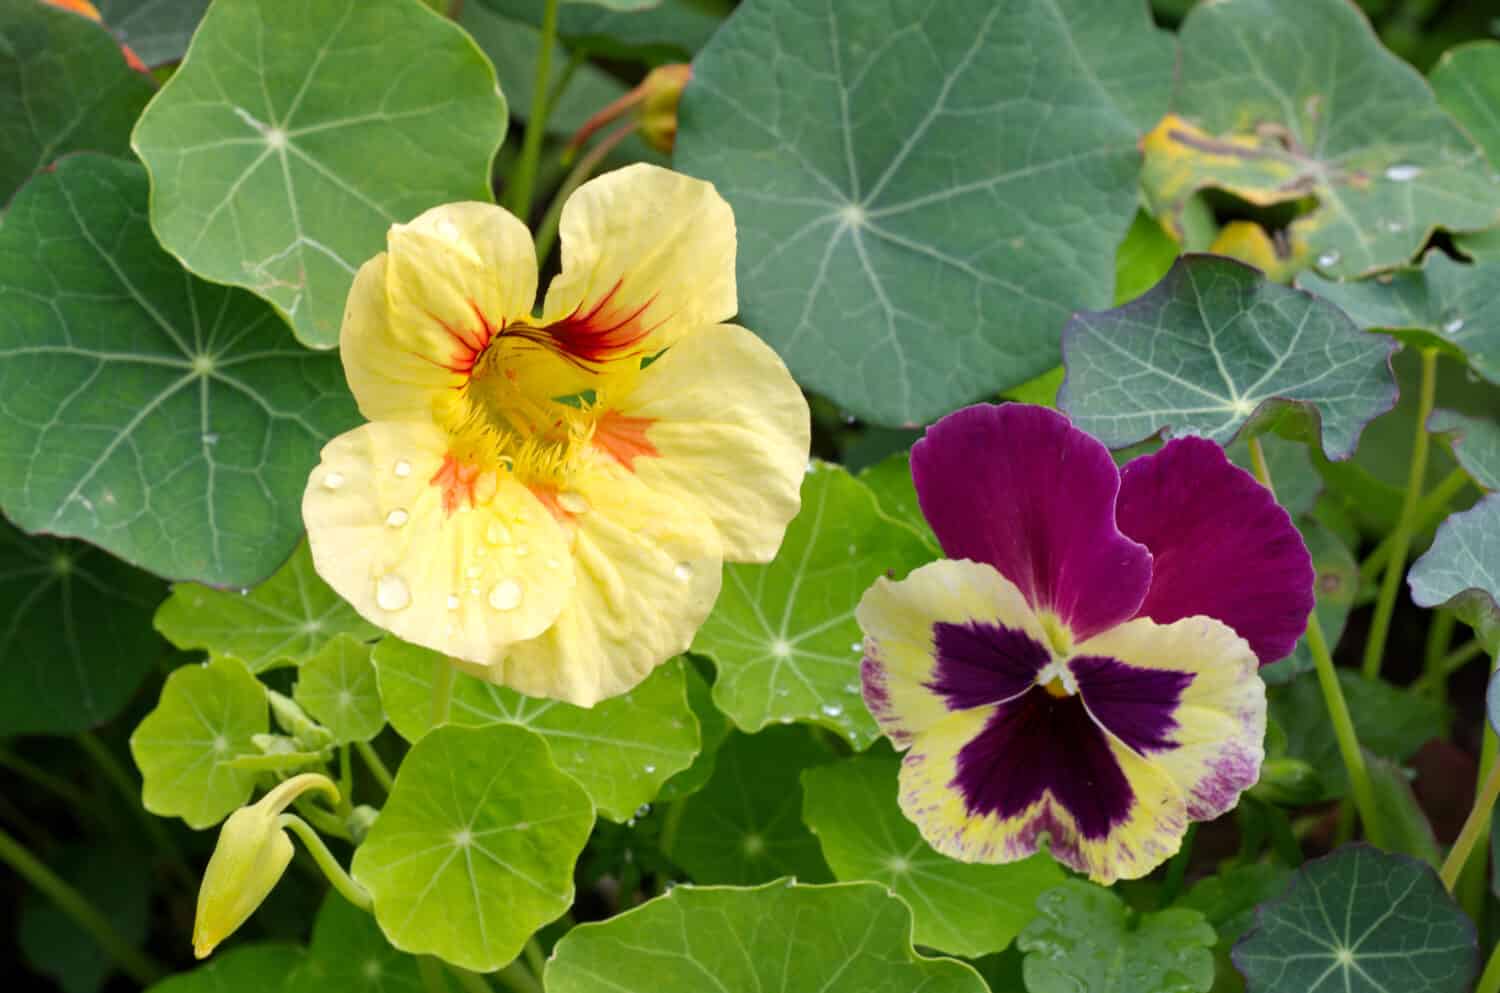 The flowers of nasturtium (lat. Tropaeolum) and three-colored violets (lat. Viola tricolor)